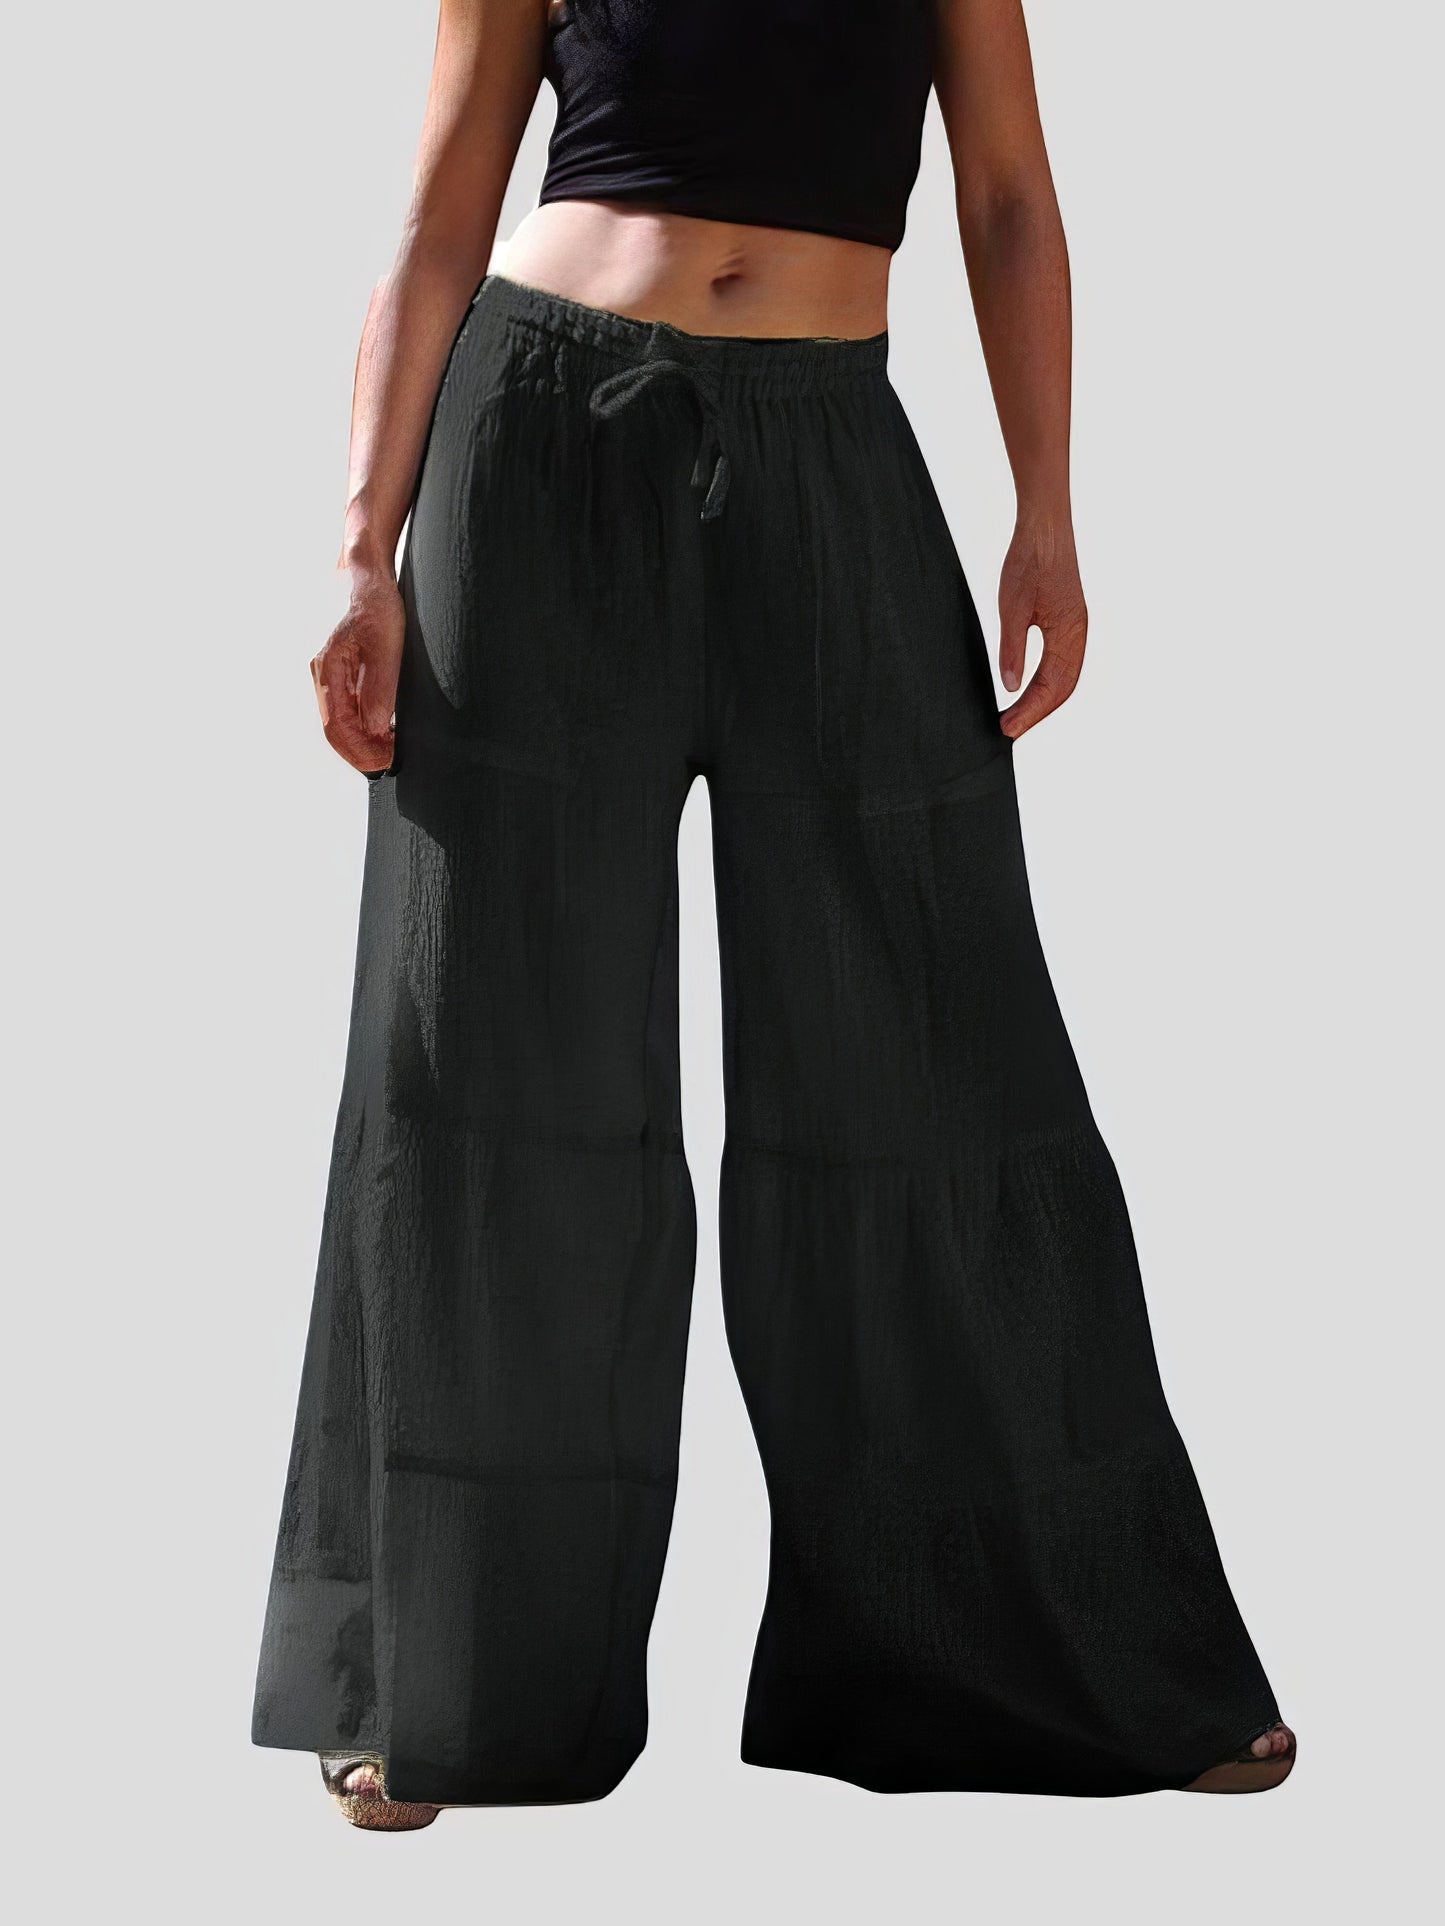 Pants - Loose Solid Elastic Waist Plus Size Wide Leg Pants - MsDressly